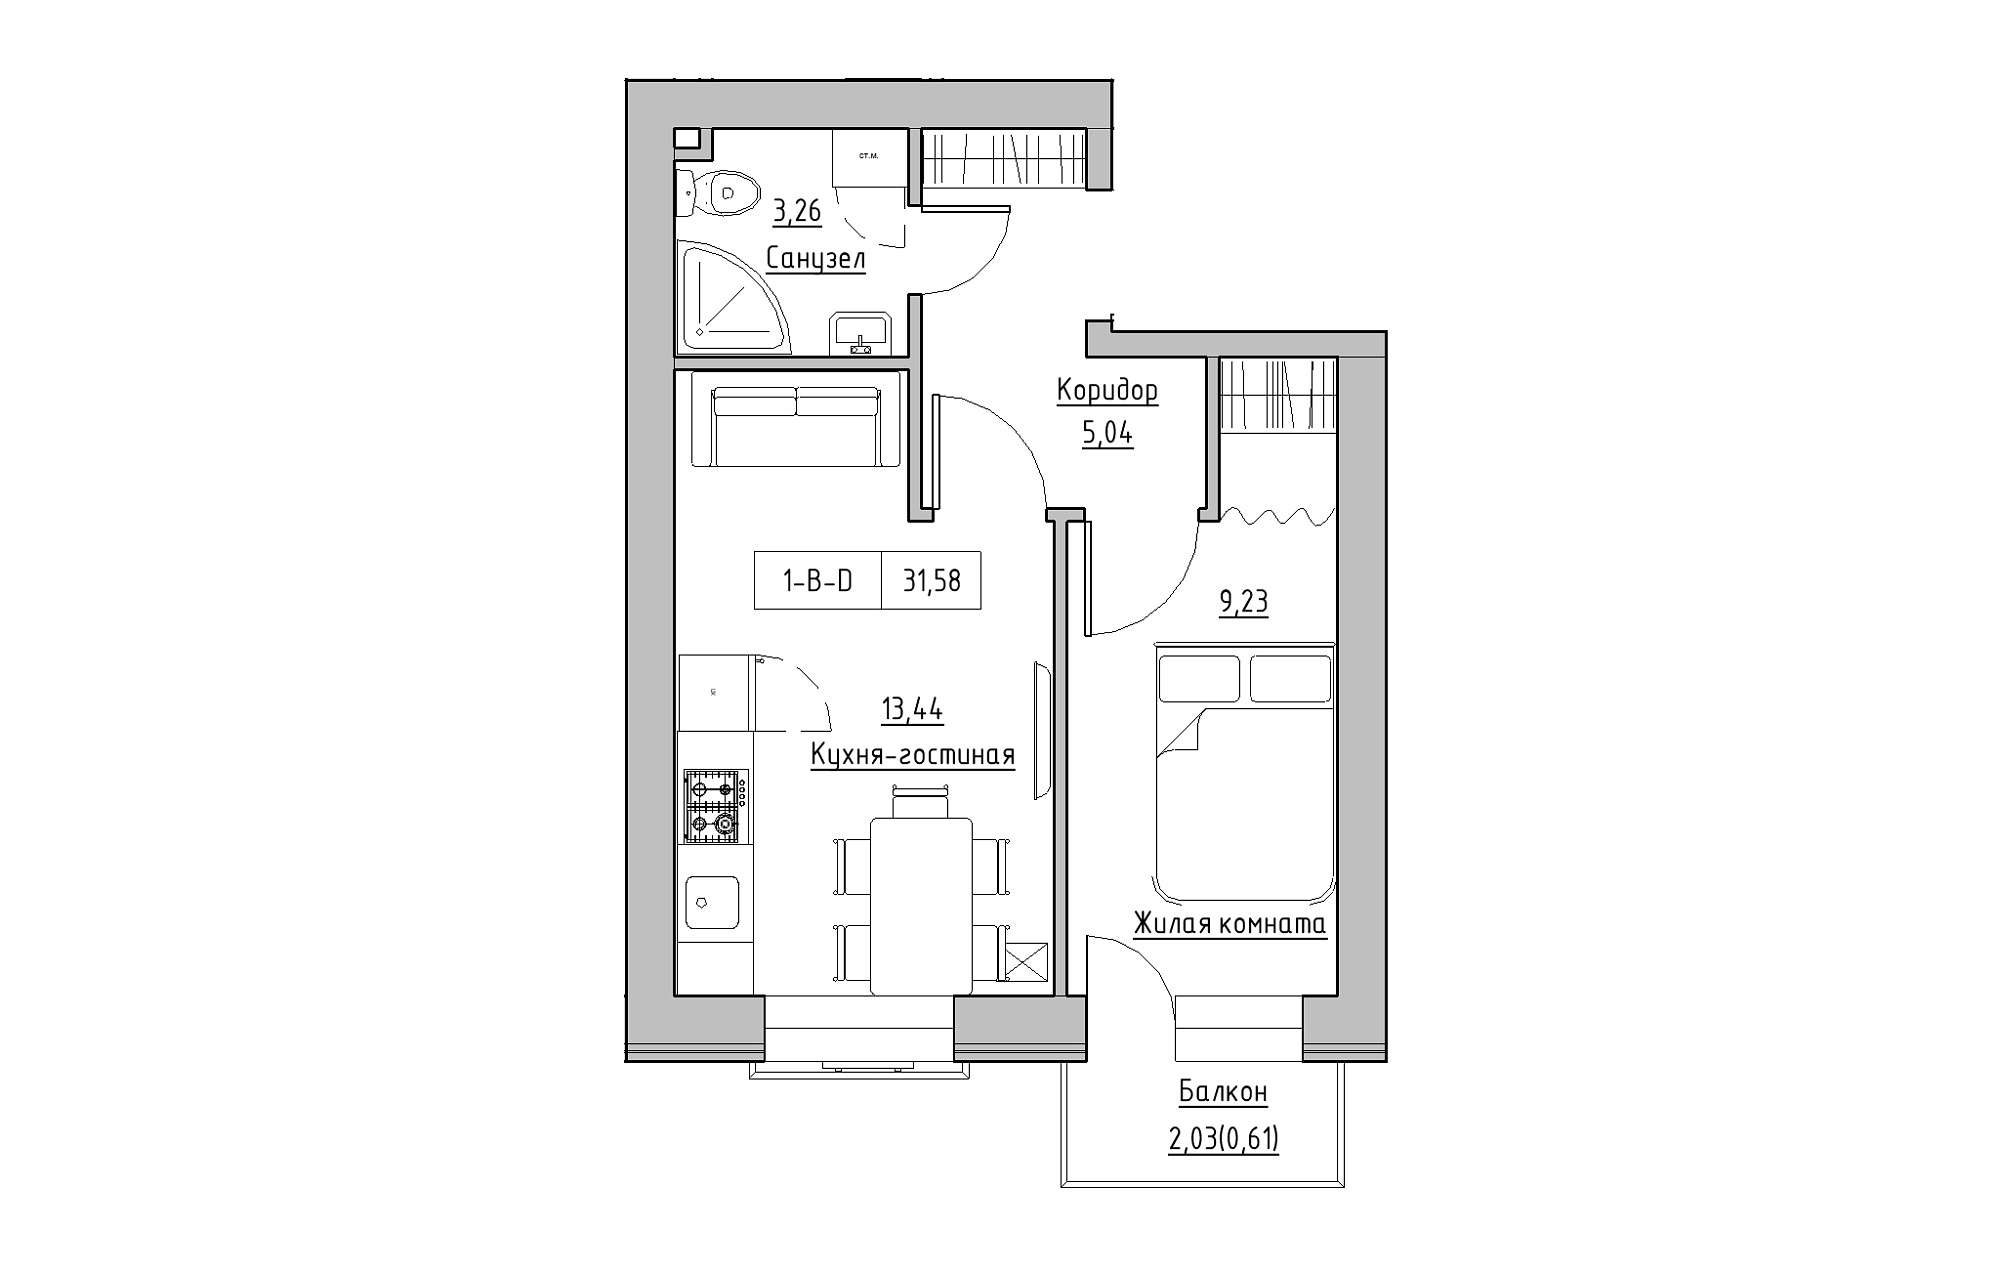 Planning 1-rm flats area 31.58m2, KS-018-02/0003.